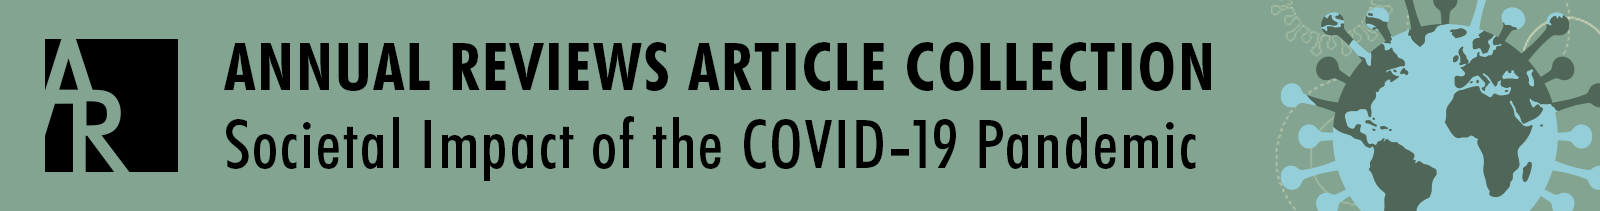 Societal Impact of the Covid-19 Pandemic